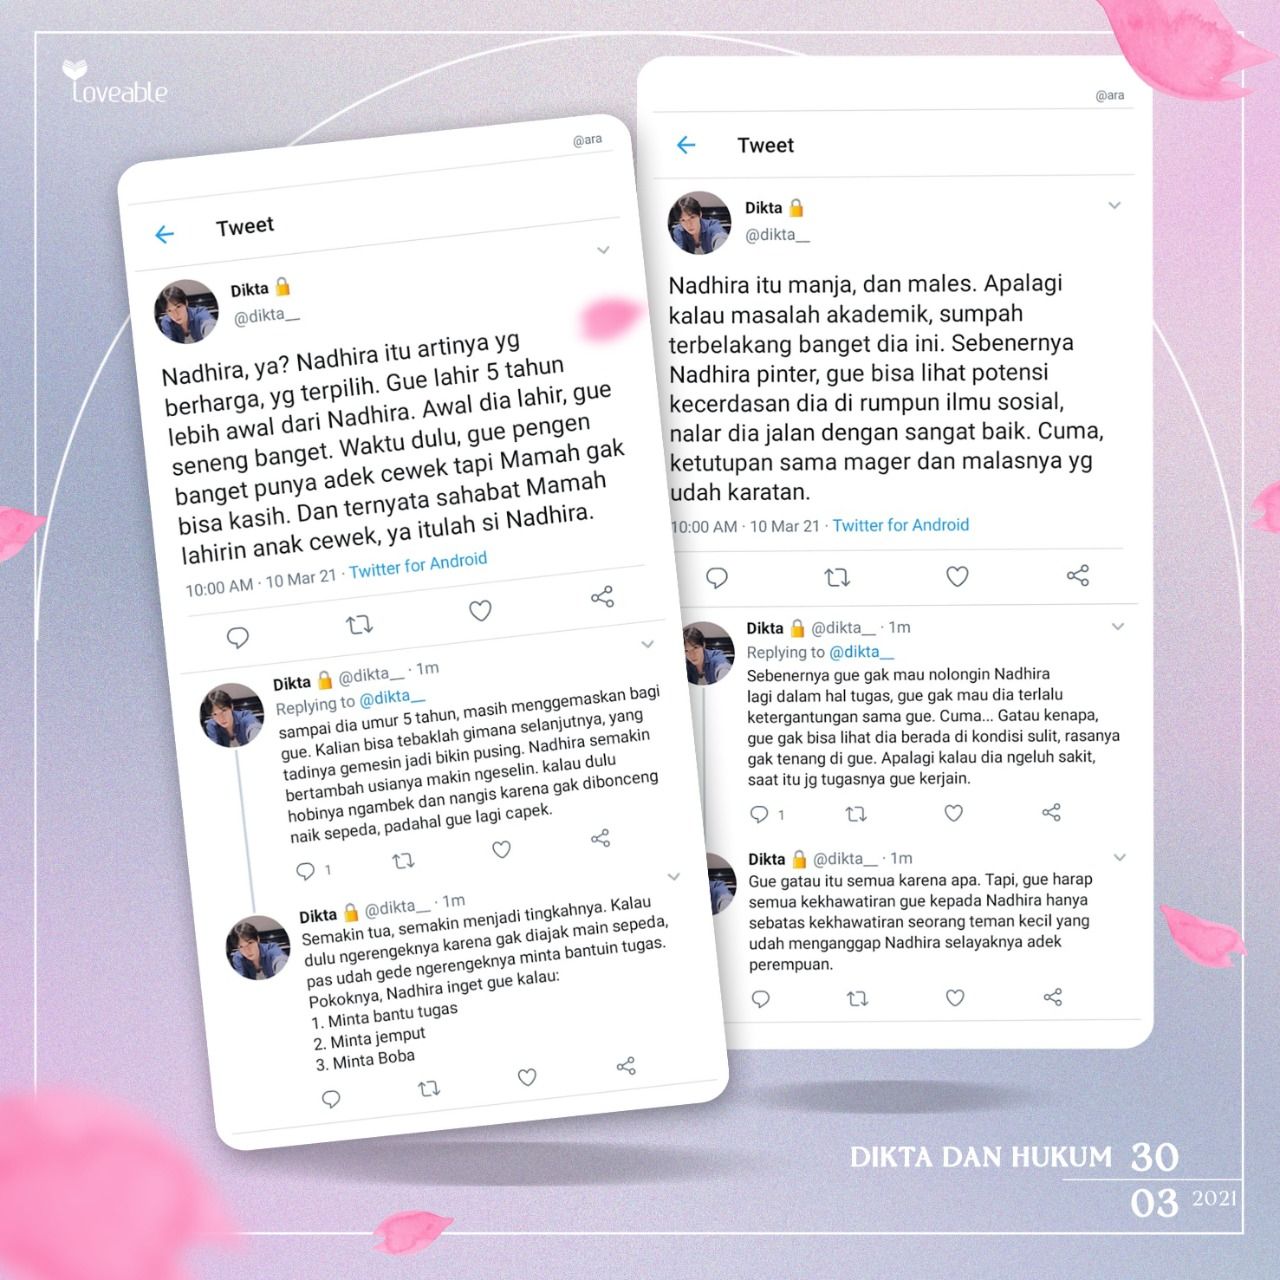 Dikta Dan Hukum Twitter - Cara Baca Novel Dikta Dan Hukum Yang Lagi Viral Sinopsis Kisah Cinta ...